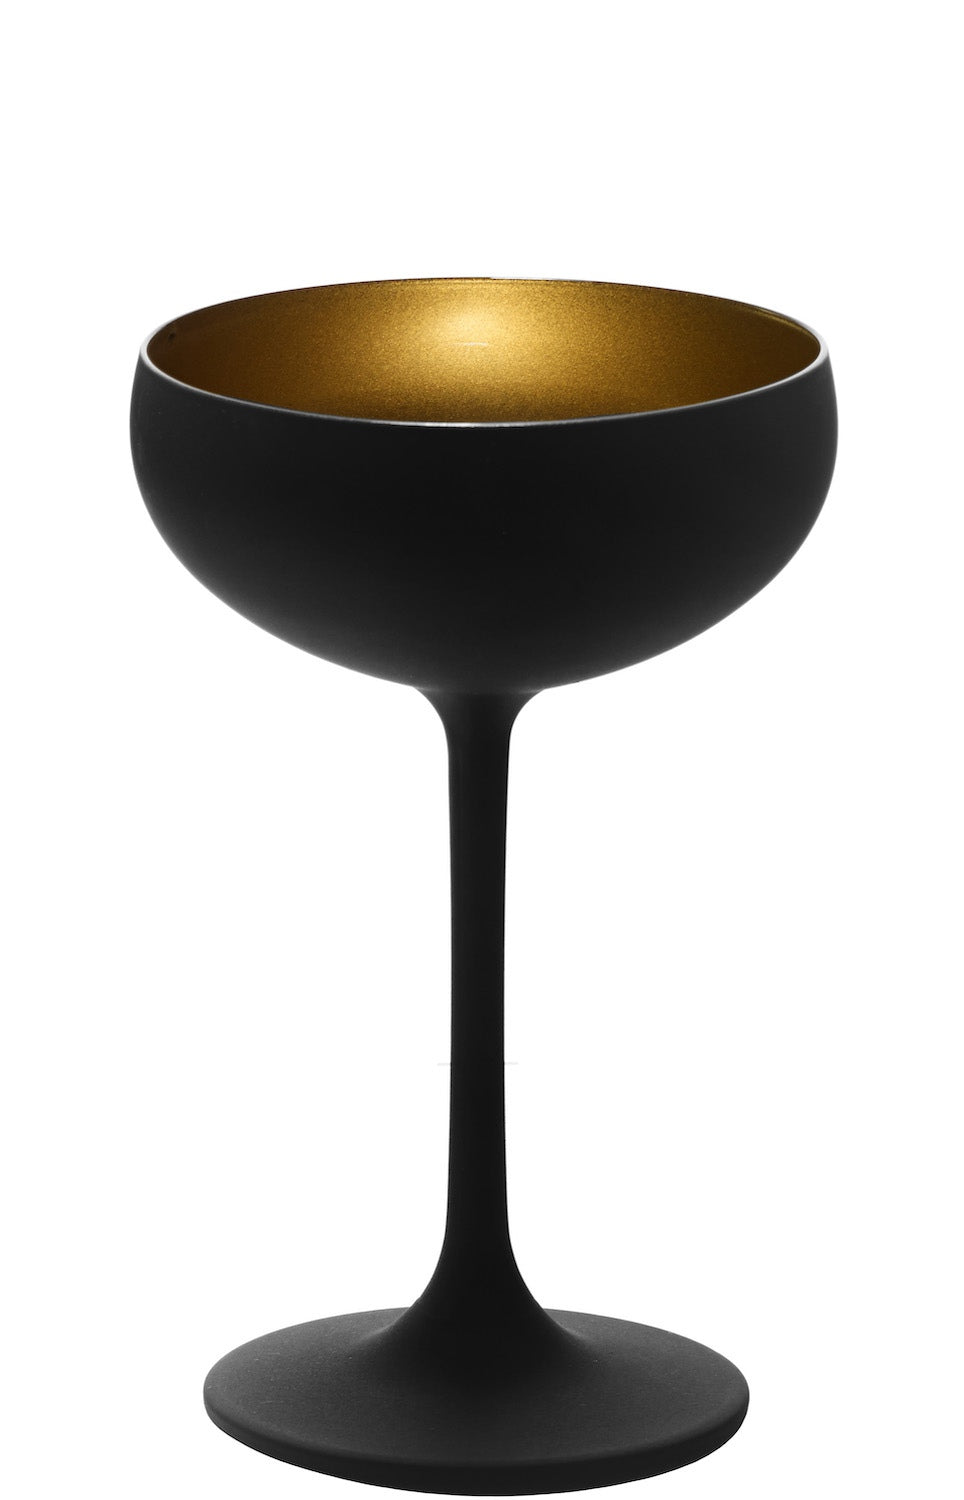 SekleBo® Selbstklebende Schneekristalle in gold, ca. 25 mm breit. Rol